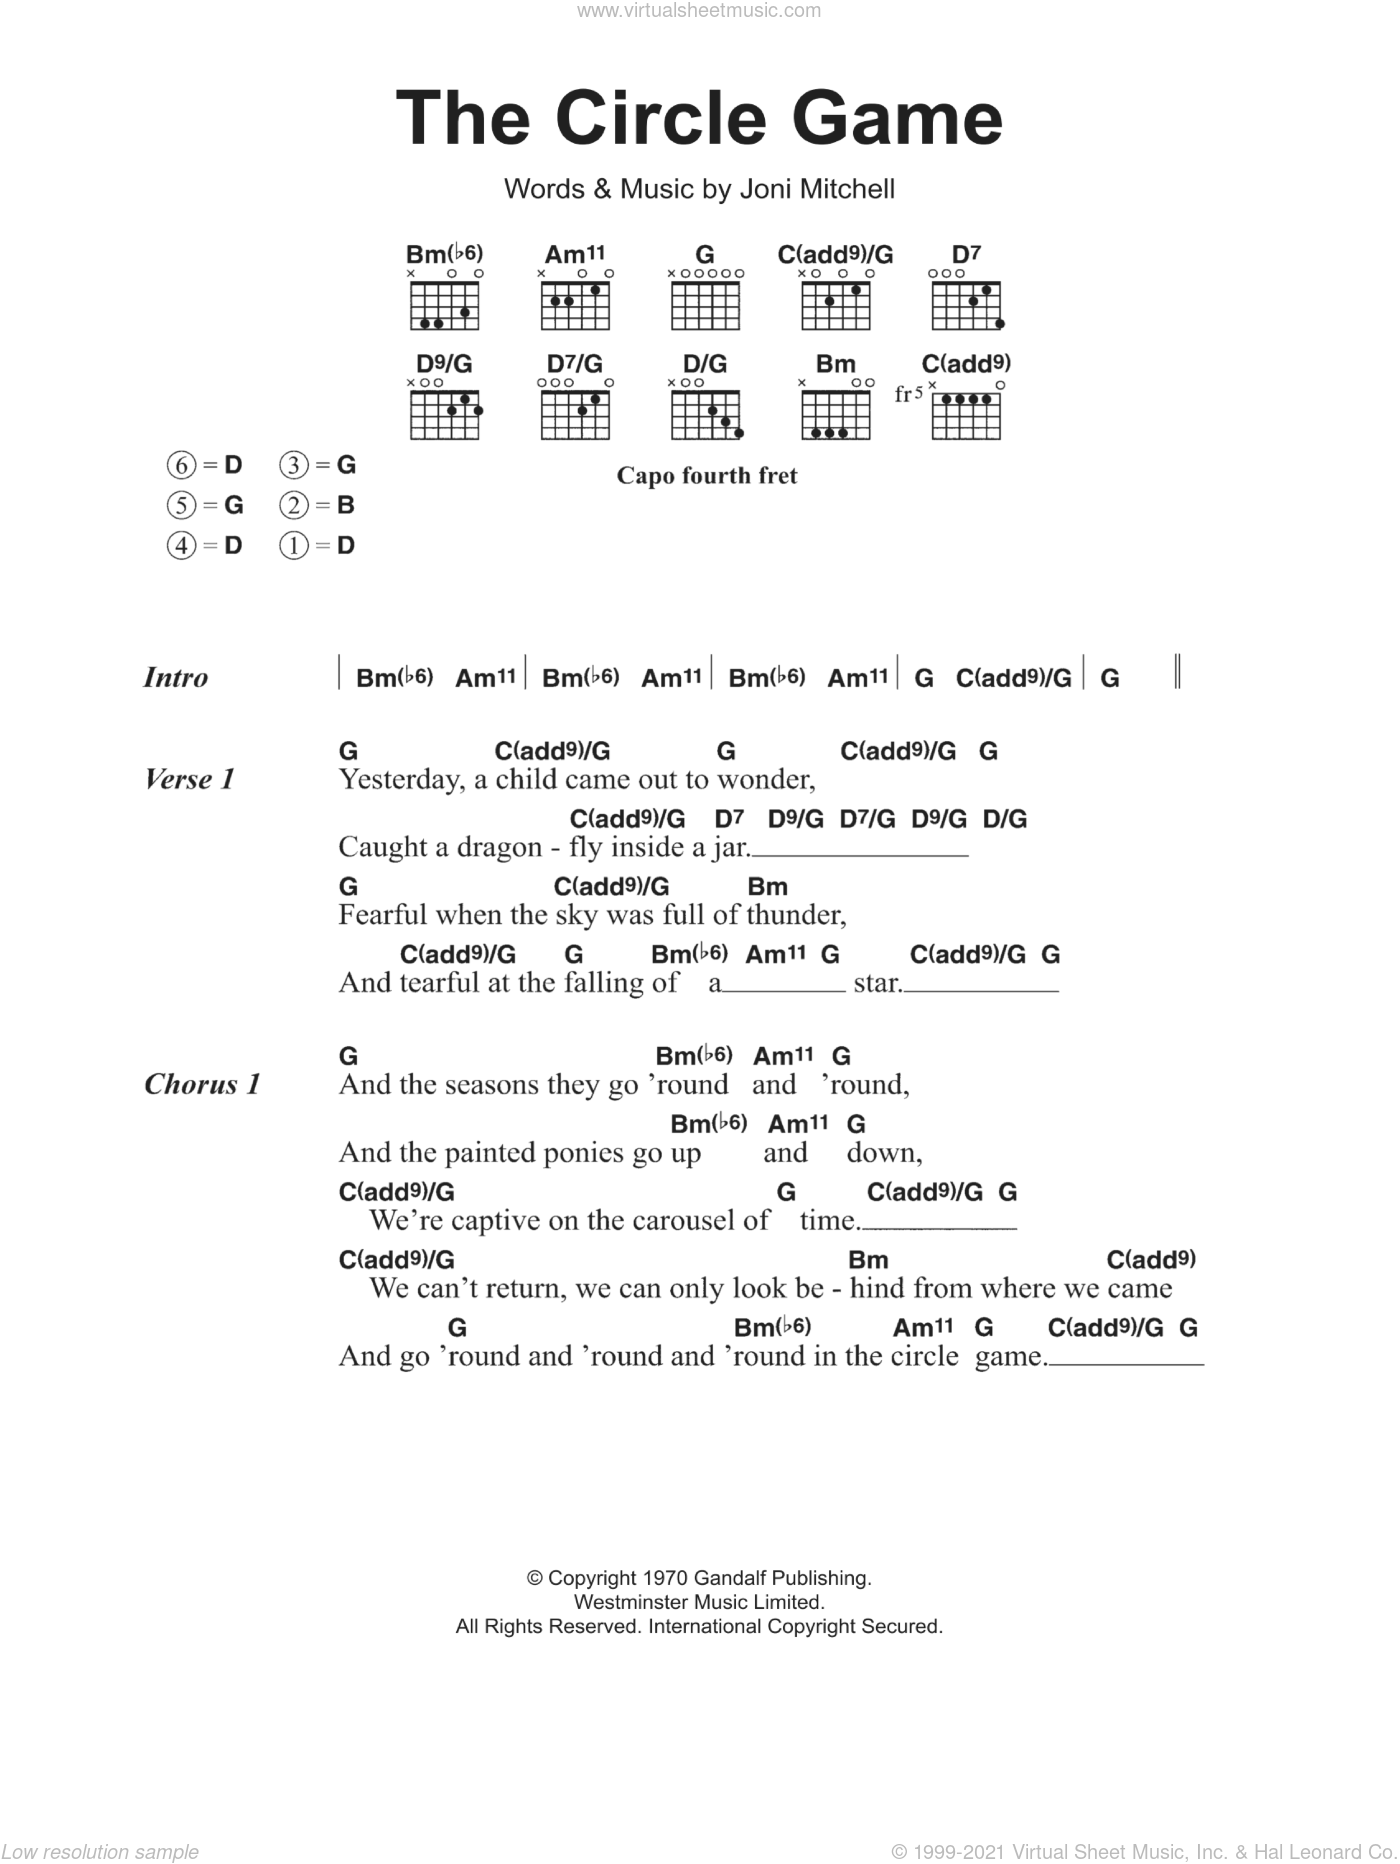 The Circle Game sheet music for guitar (chords) (PDF)